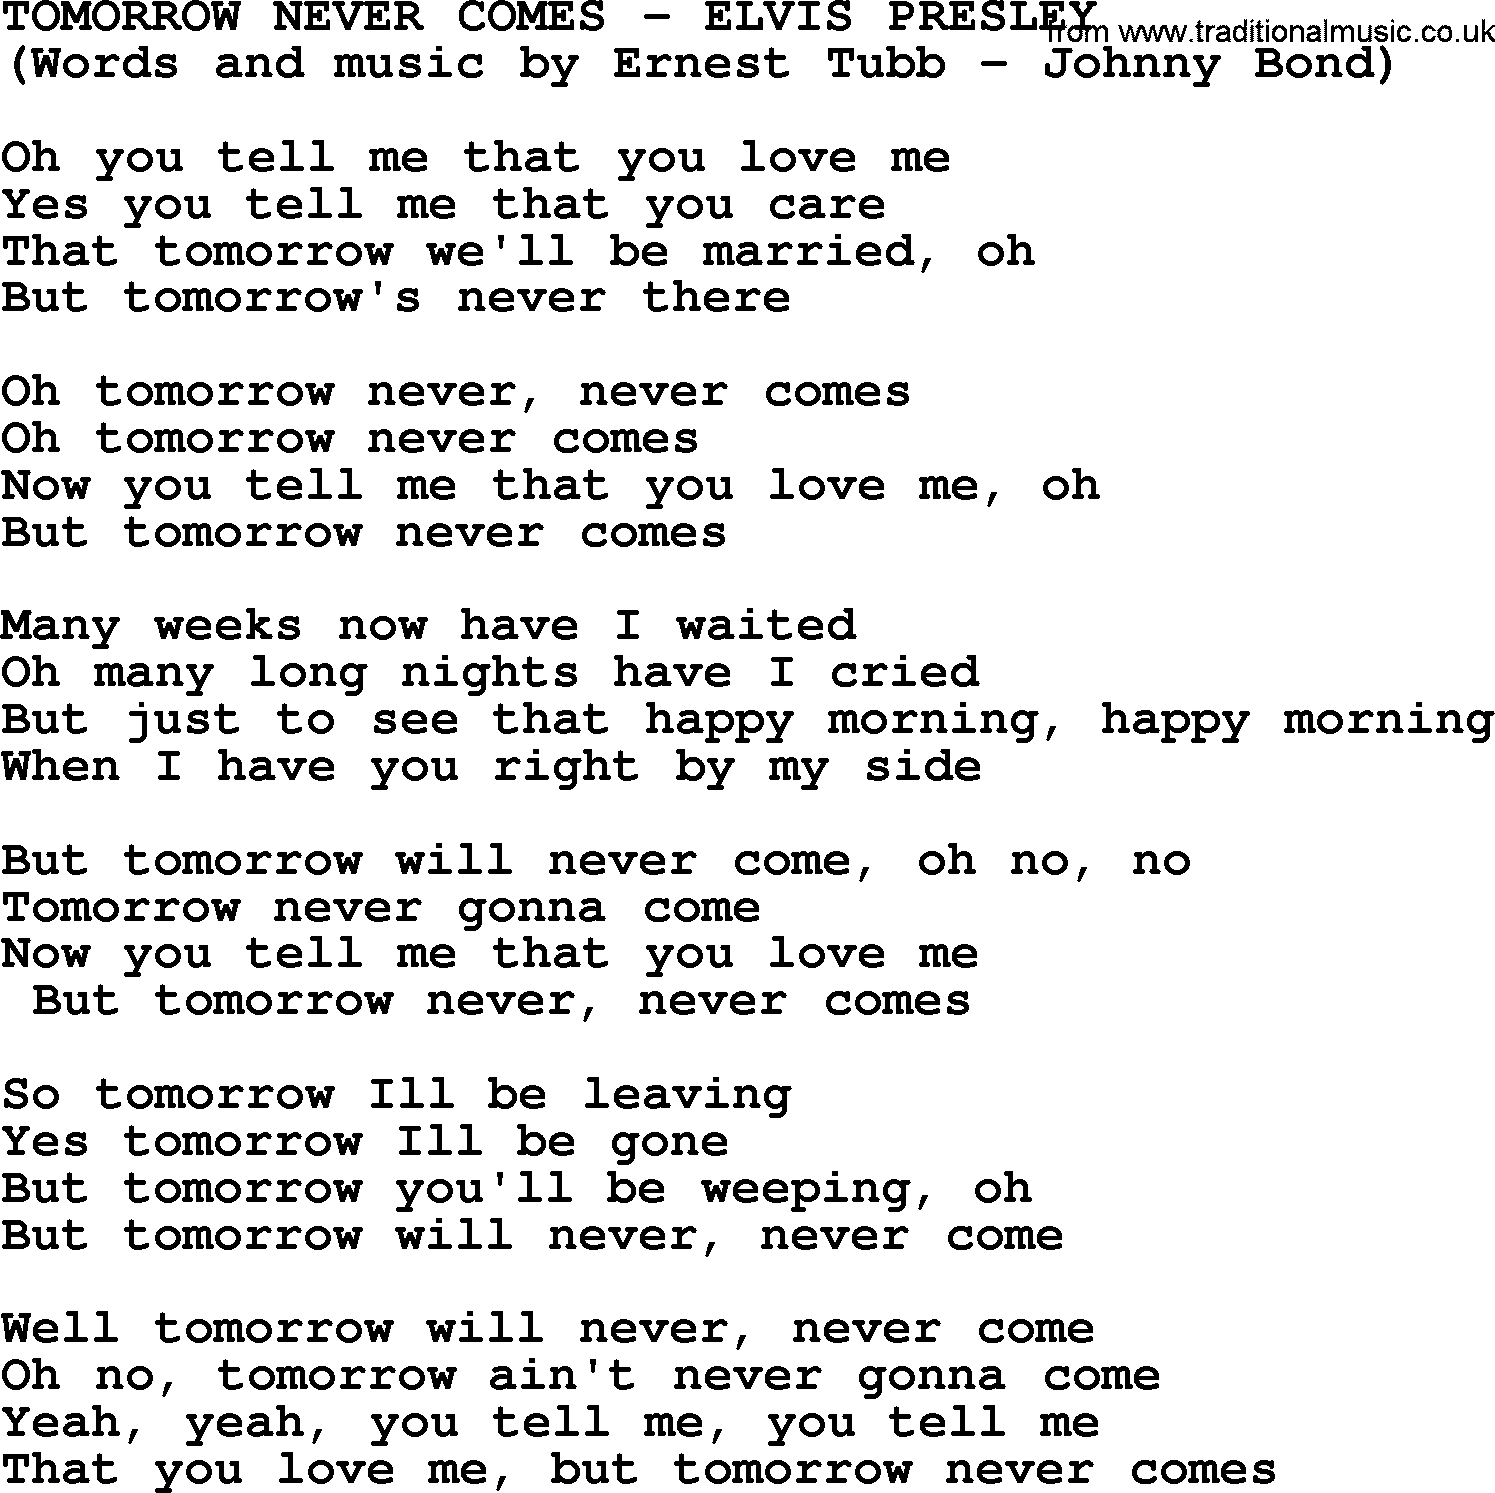 Elvis Presley song: Tomorrow Never Comes lyrics